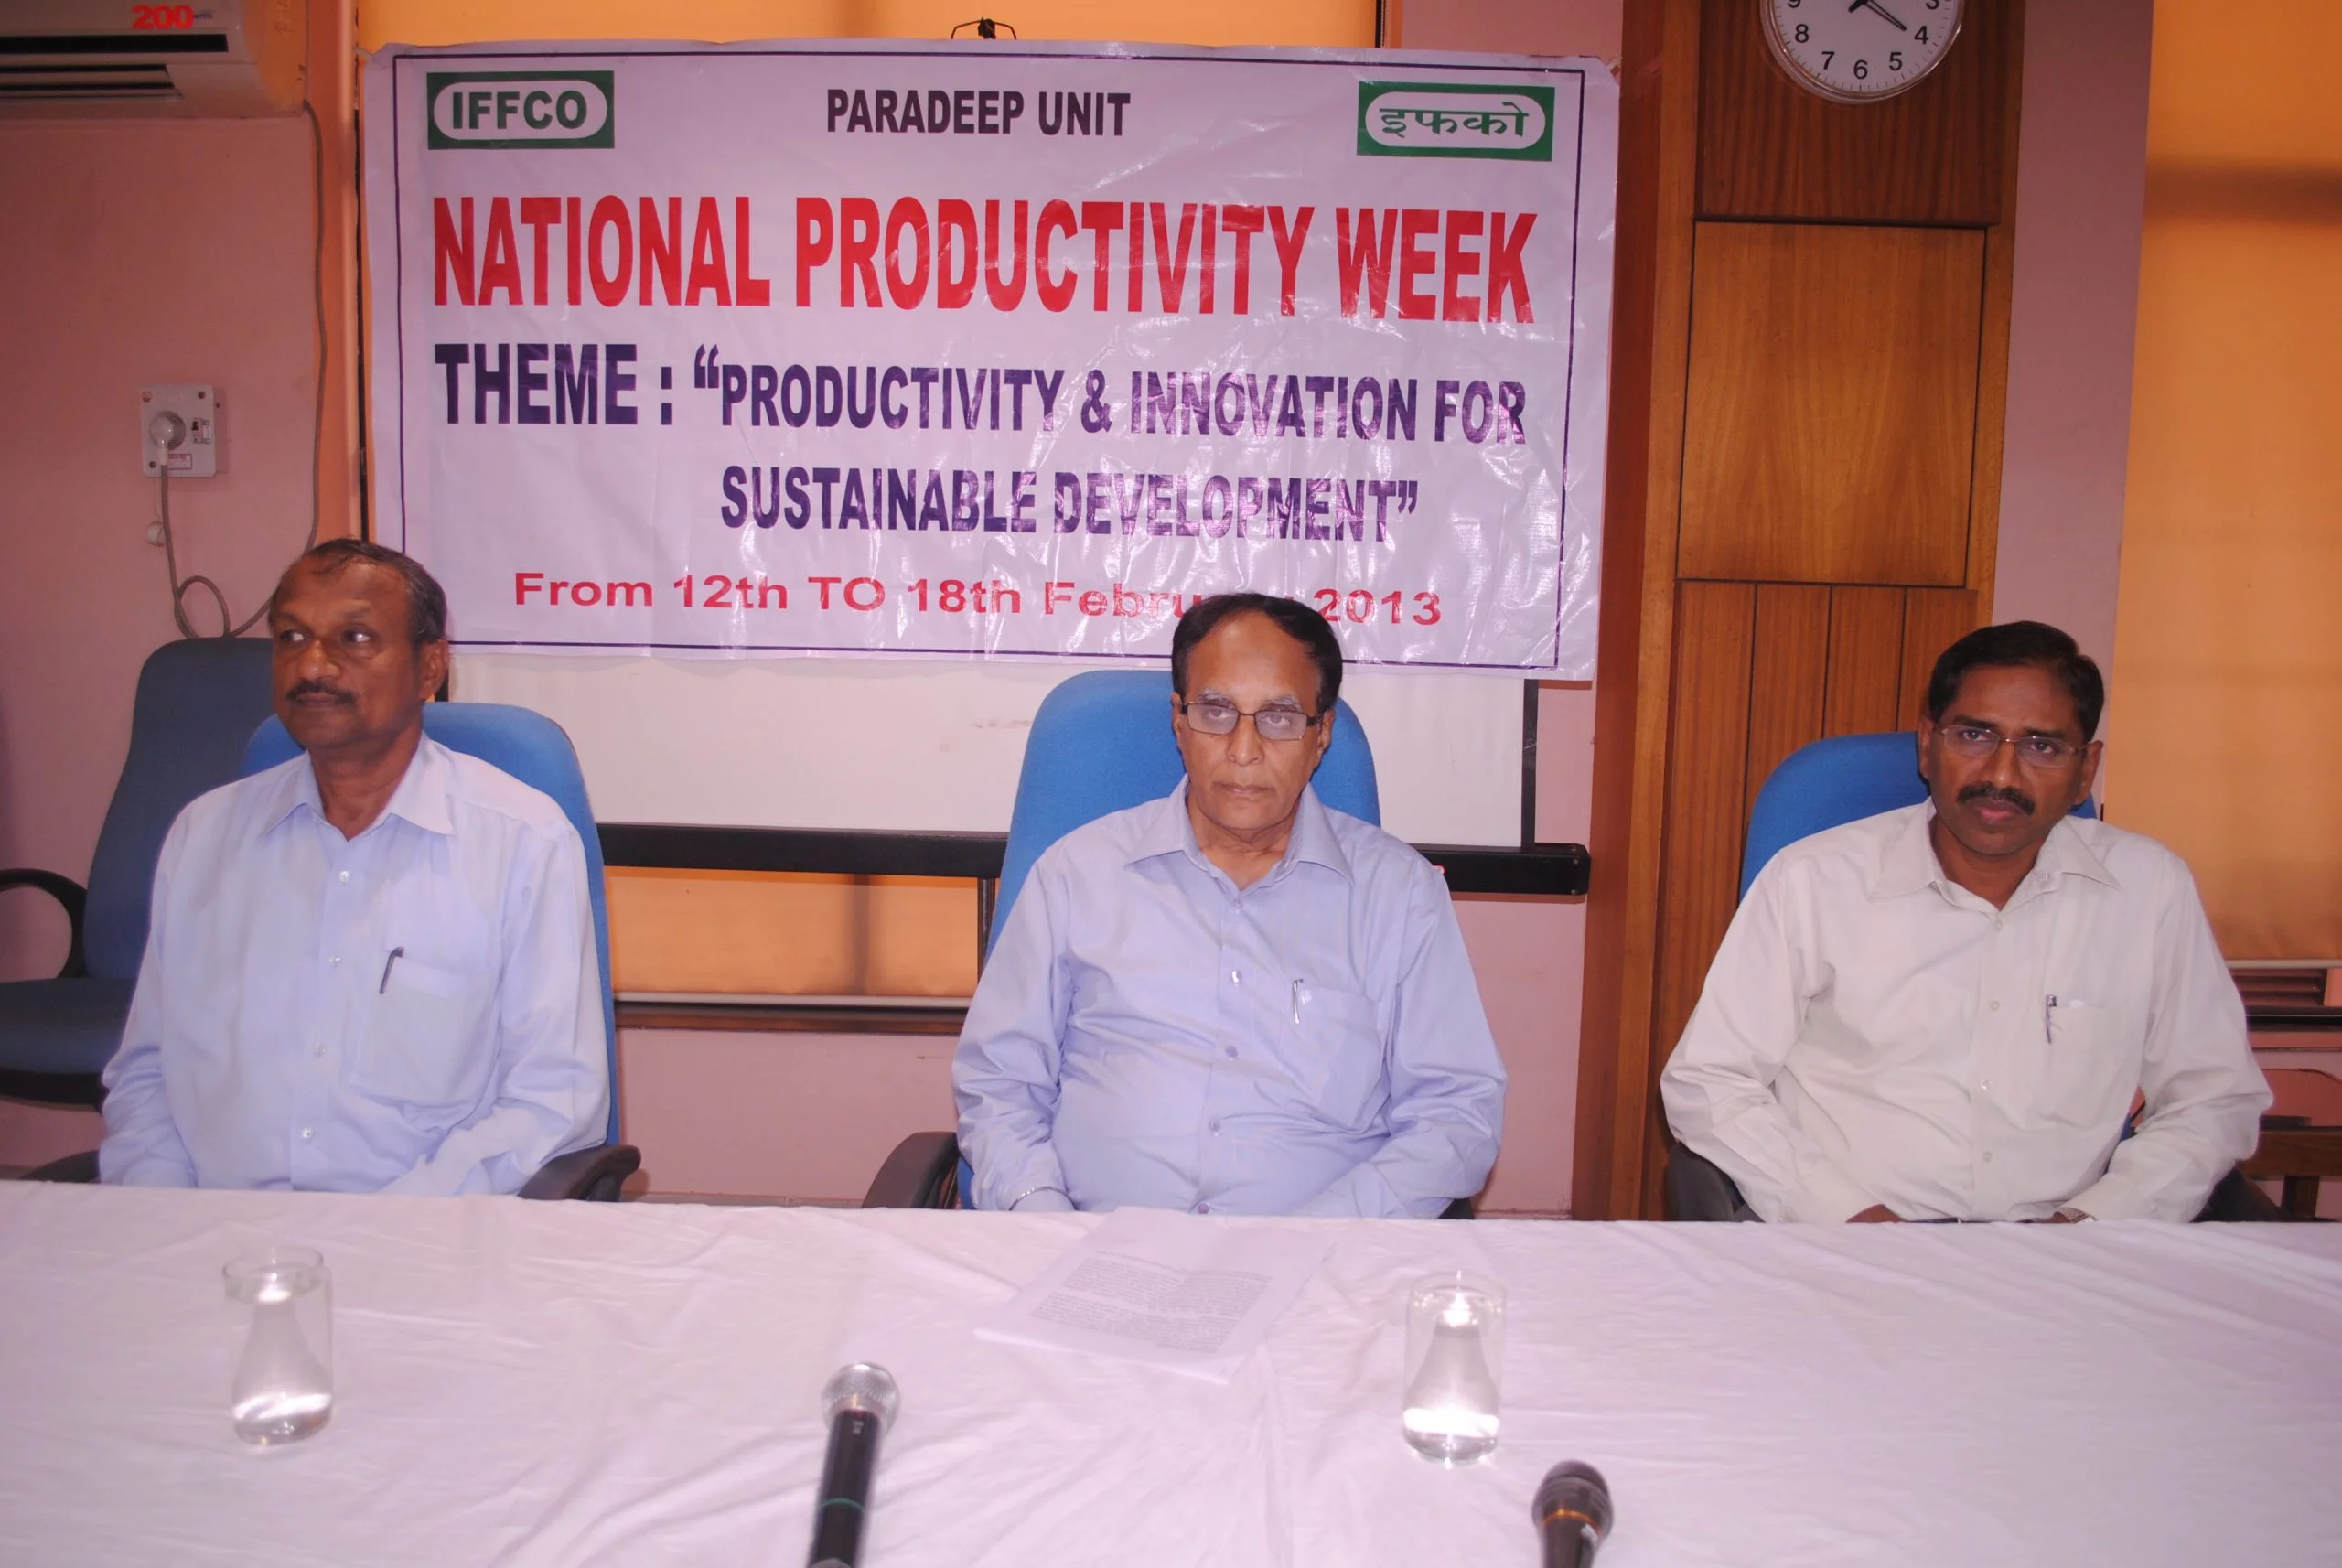 Productivity week celebrated in IFFCO Paradeep.